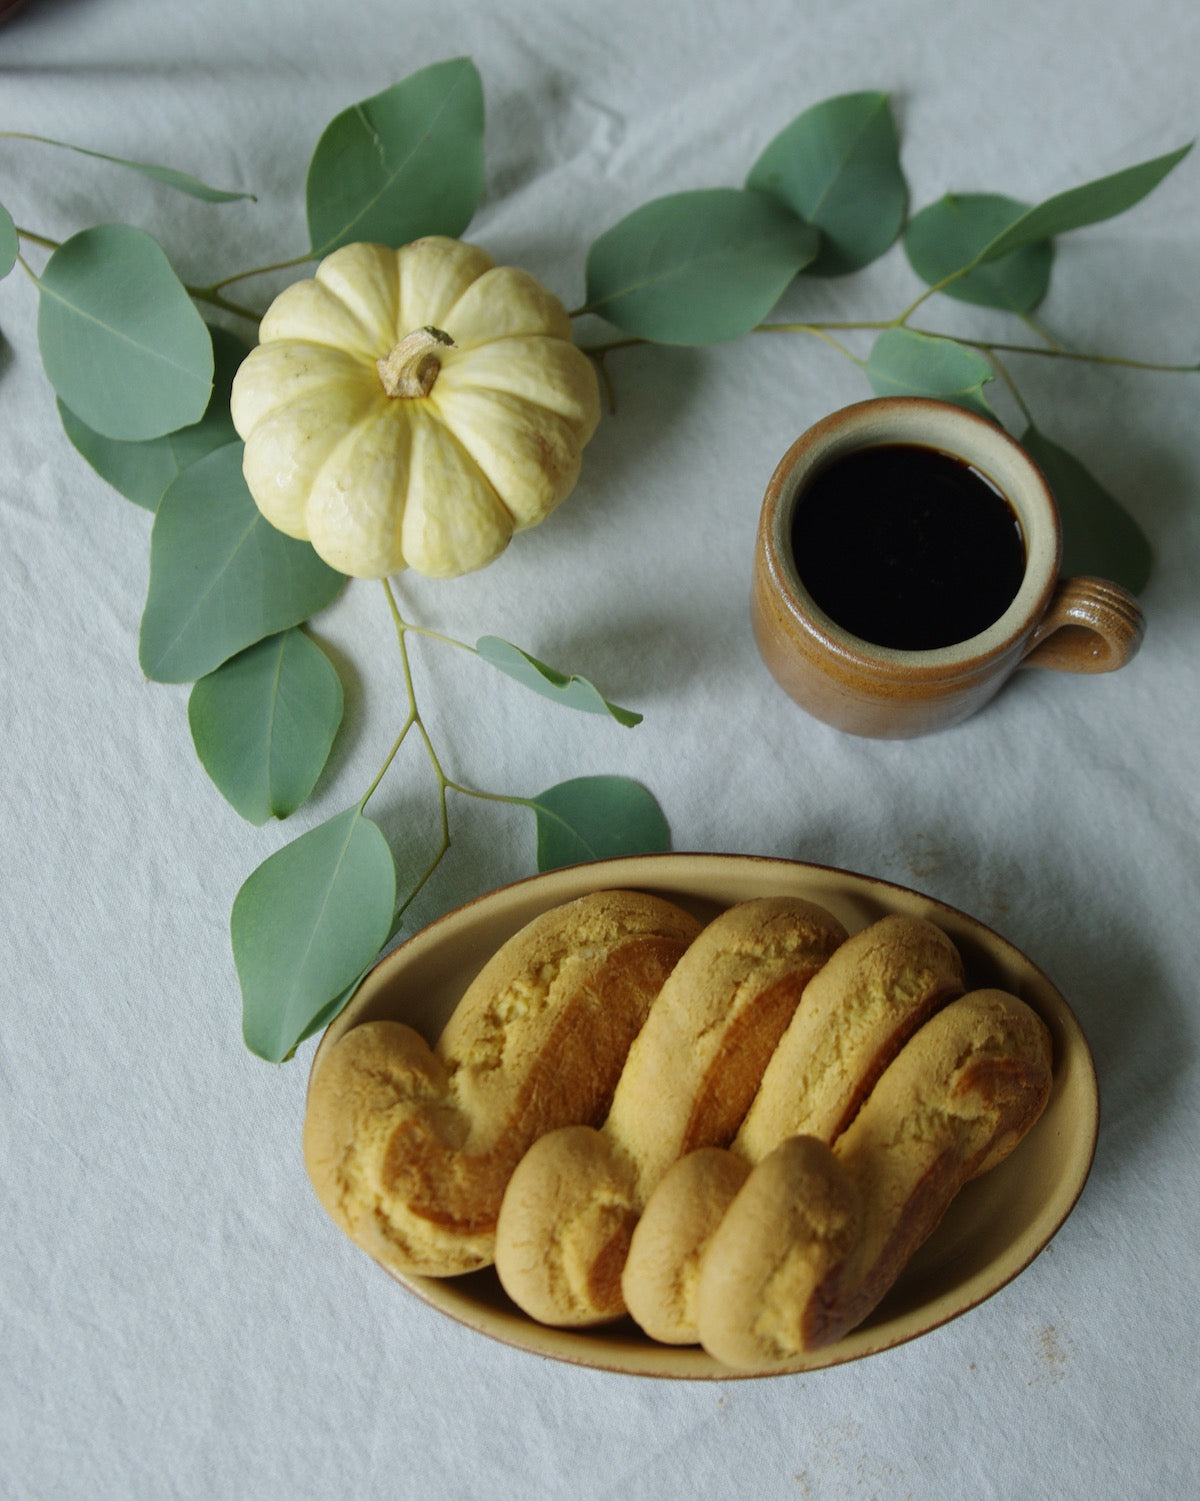 Coffee mug next to pumpkin, eucalyptus leaves, and bowl of pastries.